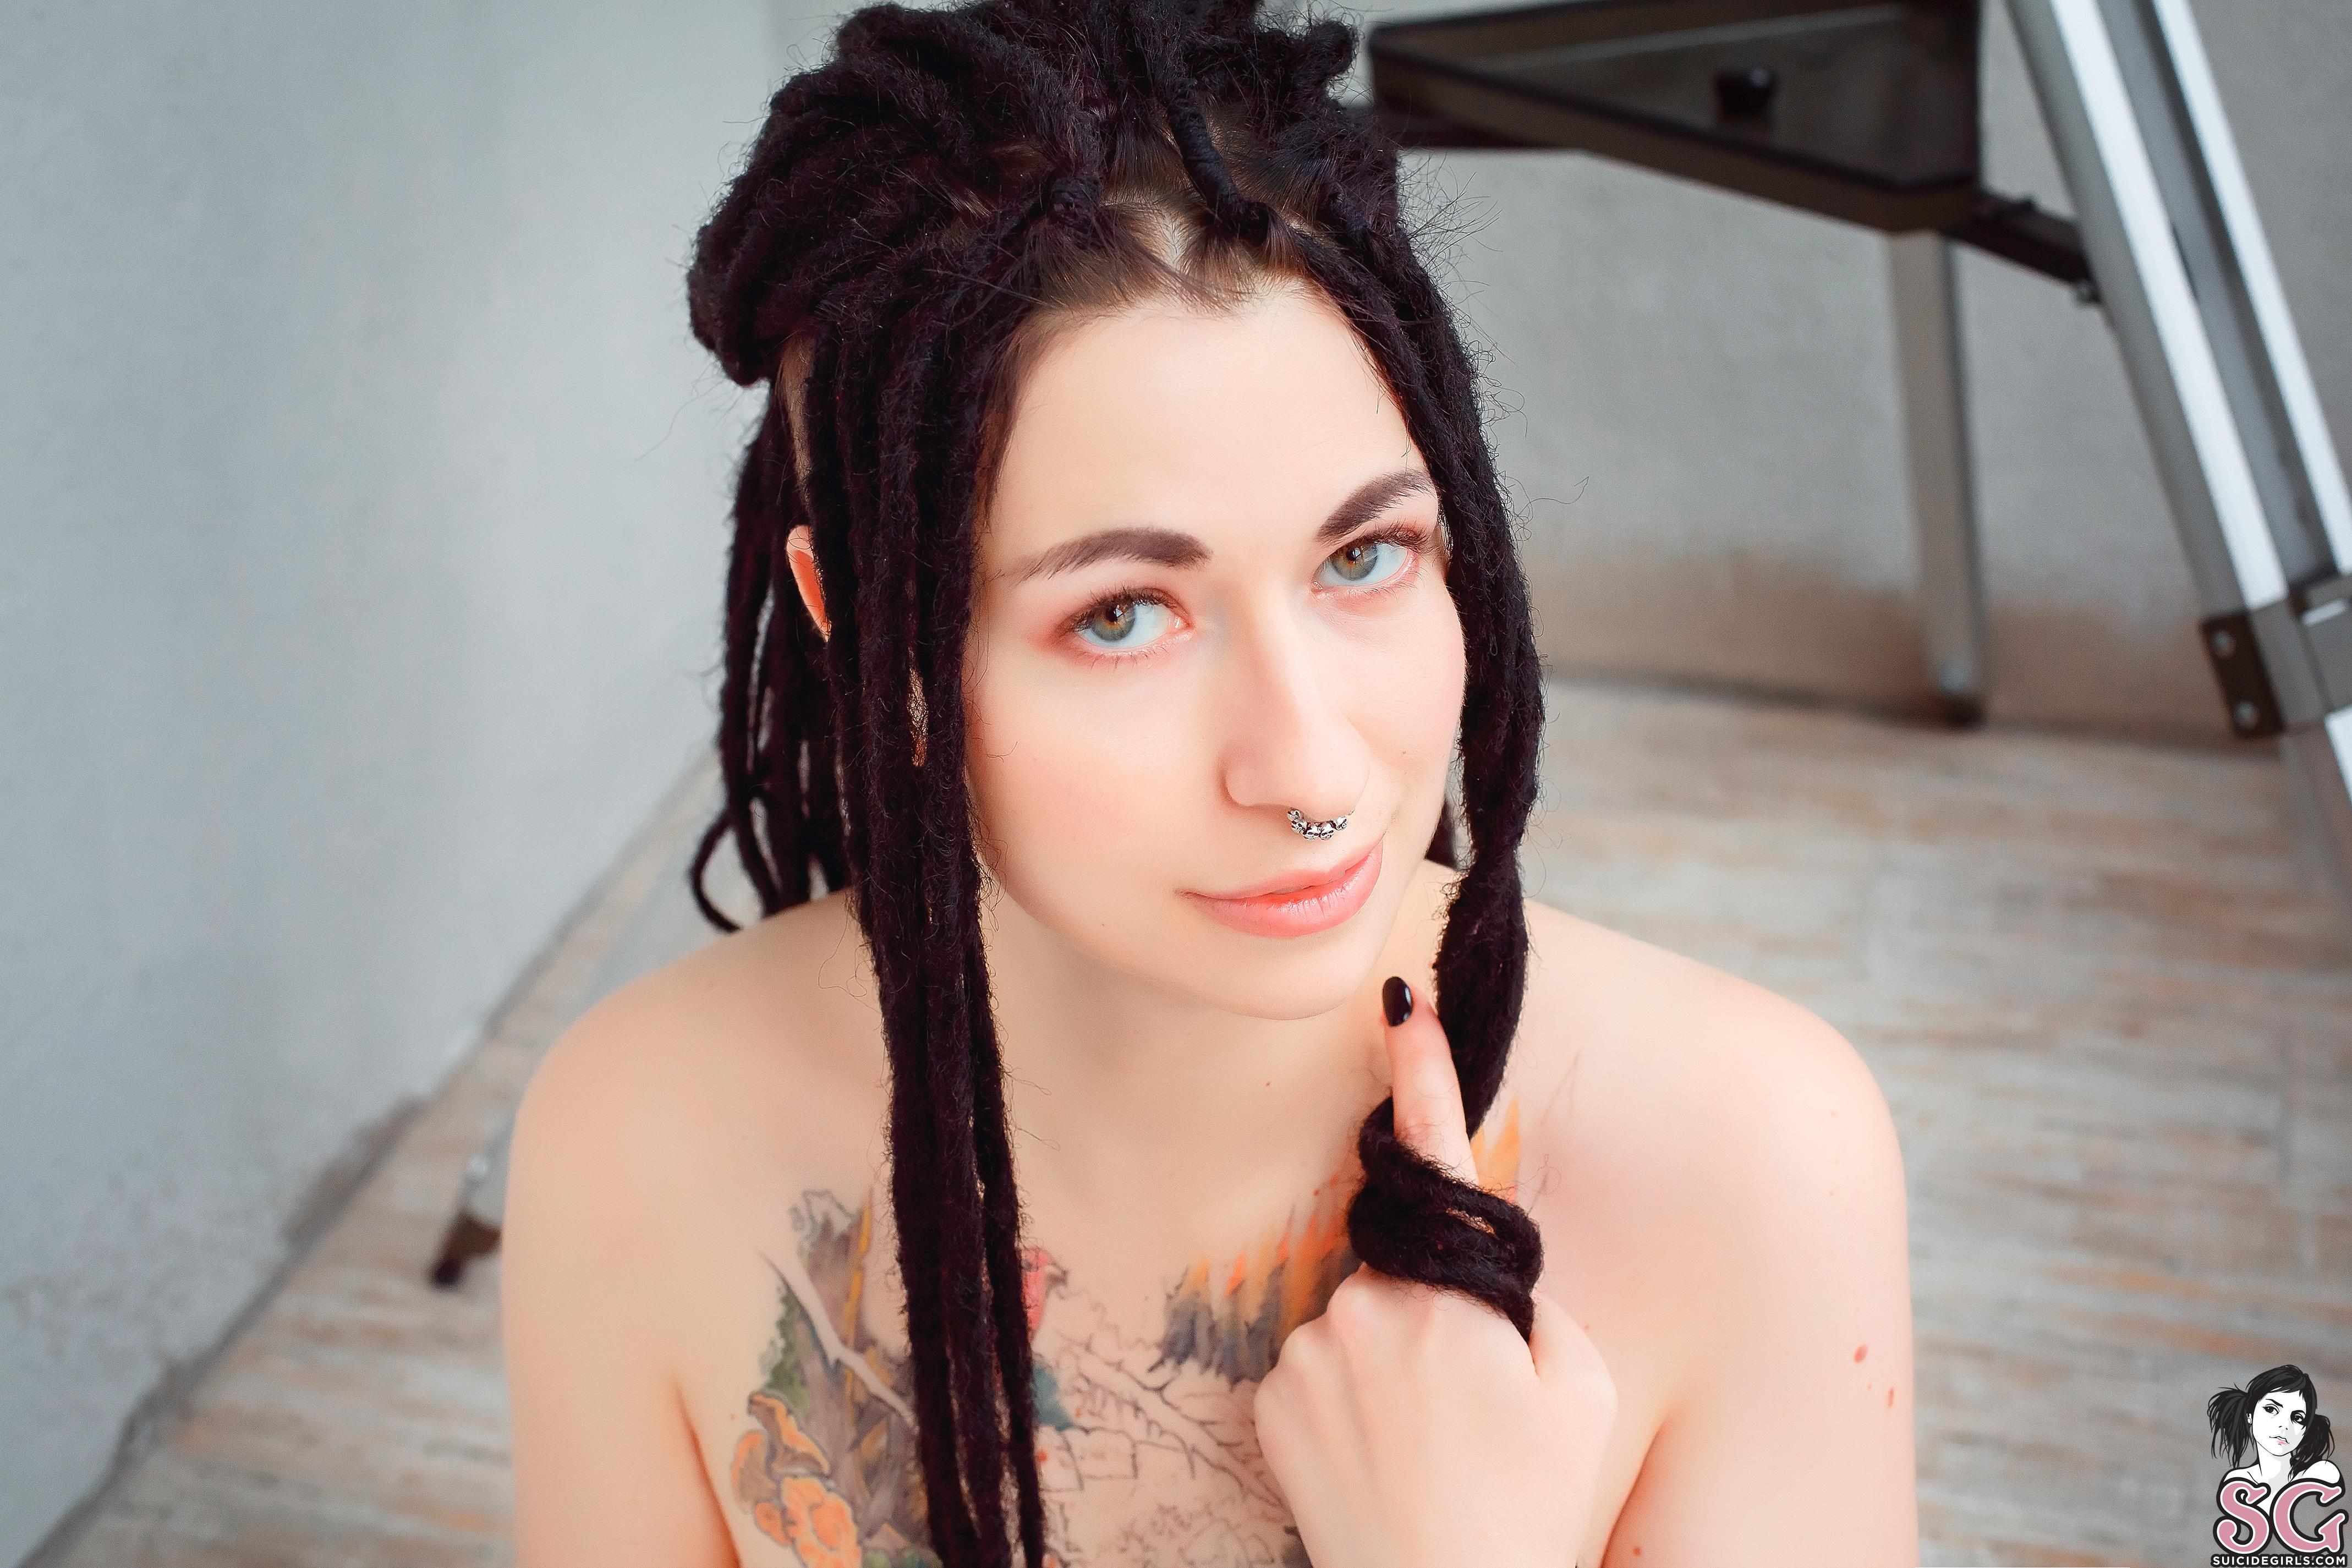 People 4275x2850 Daniellenoire Suicide Suicide Girls tattoo dreadlocks pale dark hair topless model women